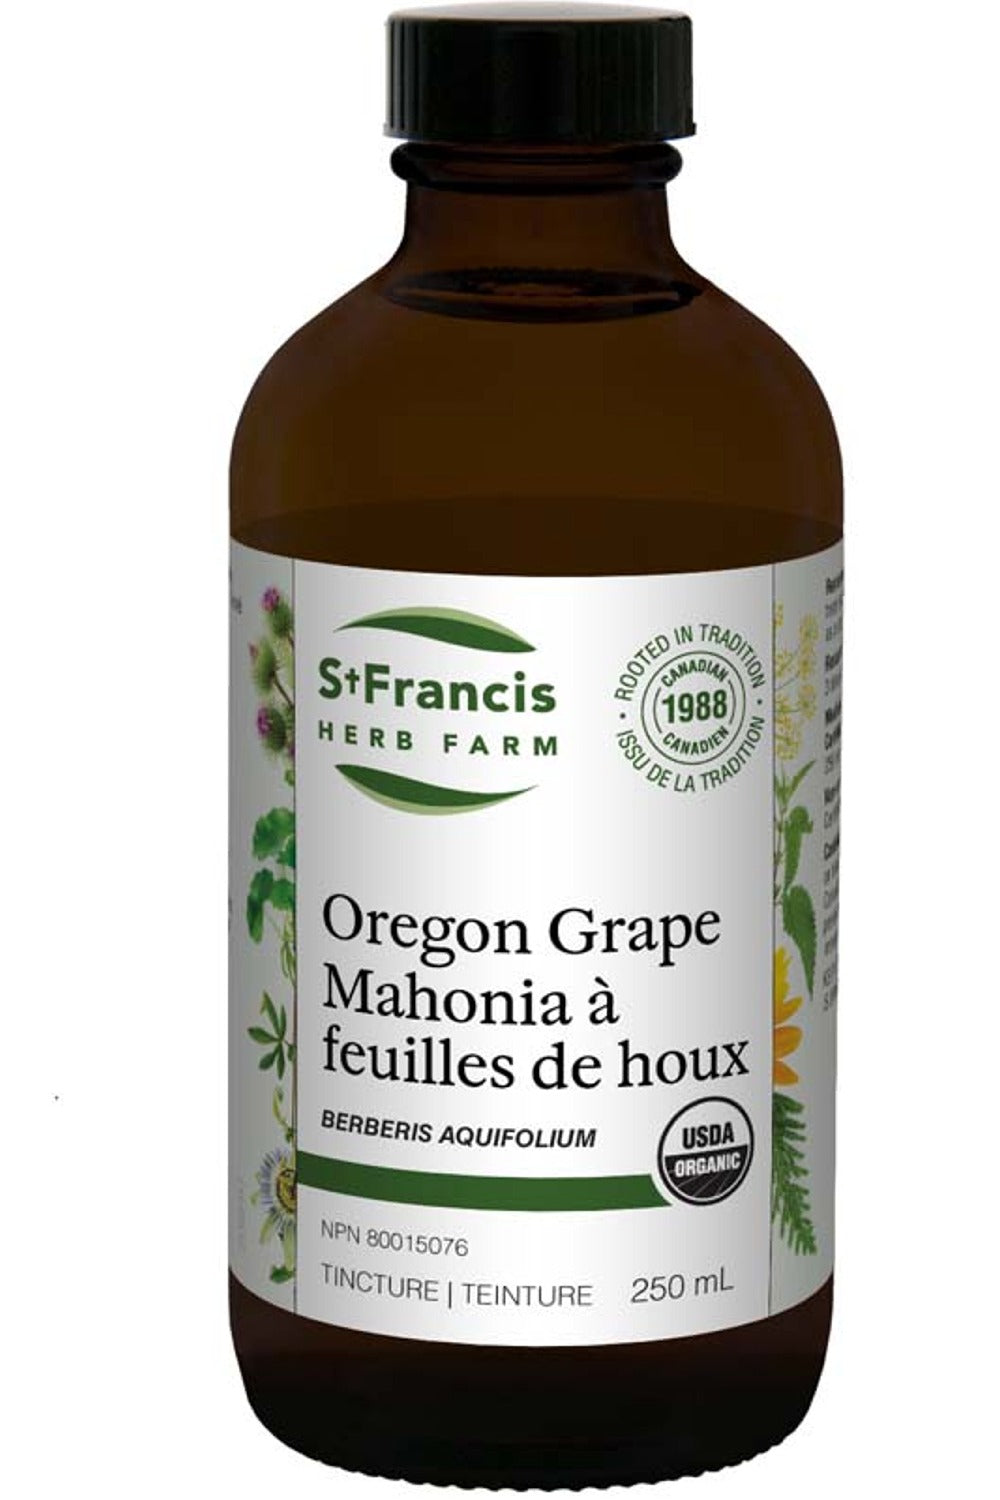 ST FRANCIS HERB FARM Oregon Grape (250 ml)